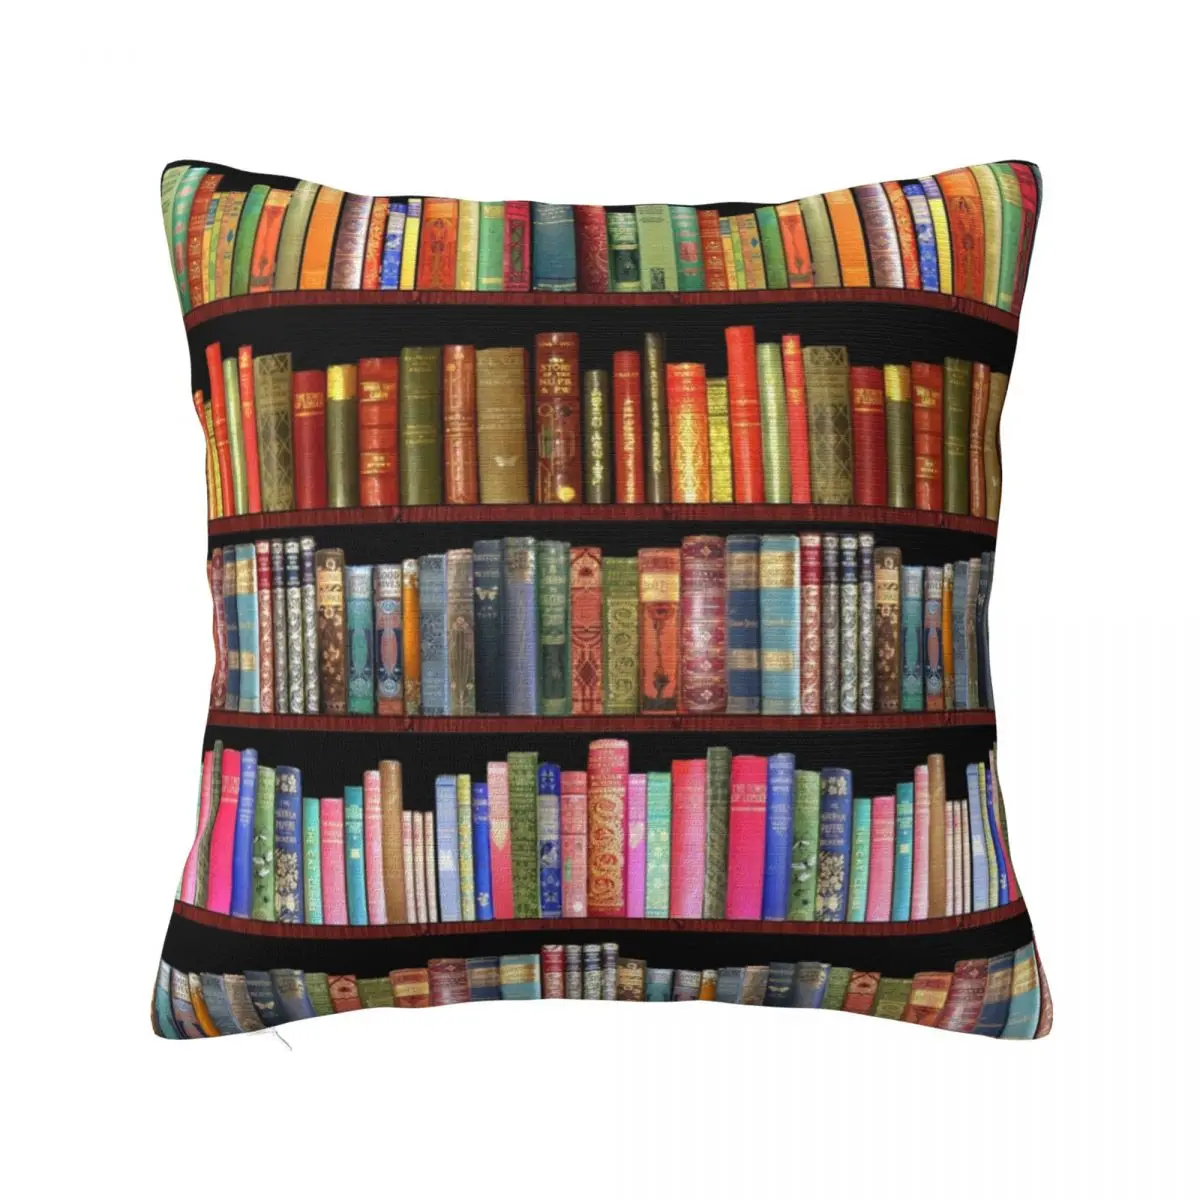 

Jane Austen Antique Books Pillowcase Soft Fabric Cushion Cover British Pride & Prejudice Pillow Case Cover Sofa Square 40*40cm